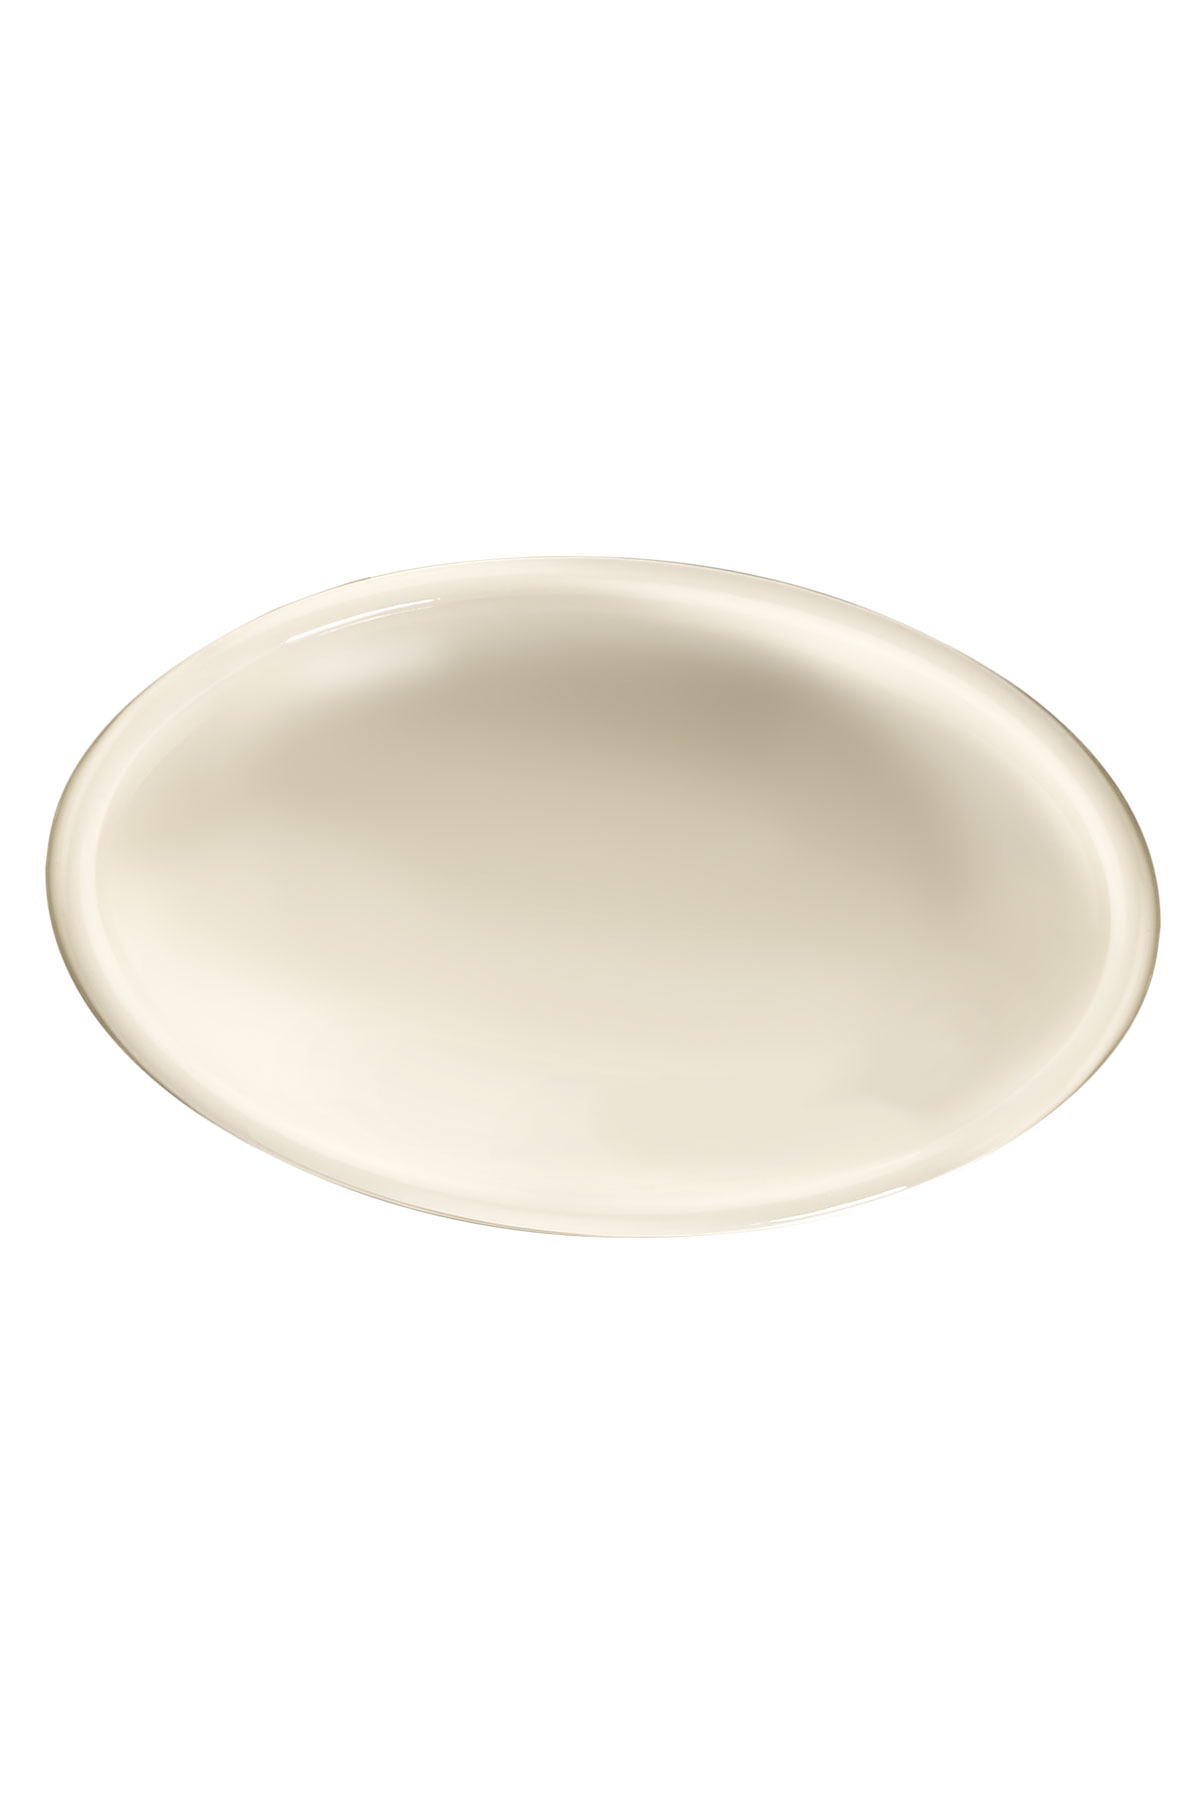 Kütahya Porselen Chef Taste Of 14 cm Oval Kase Krem